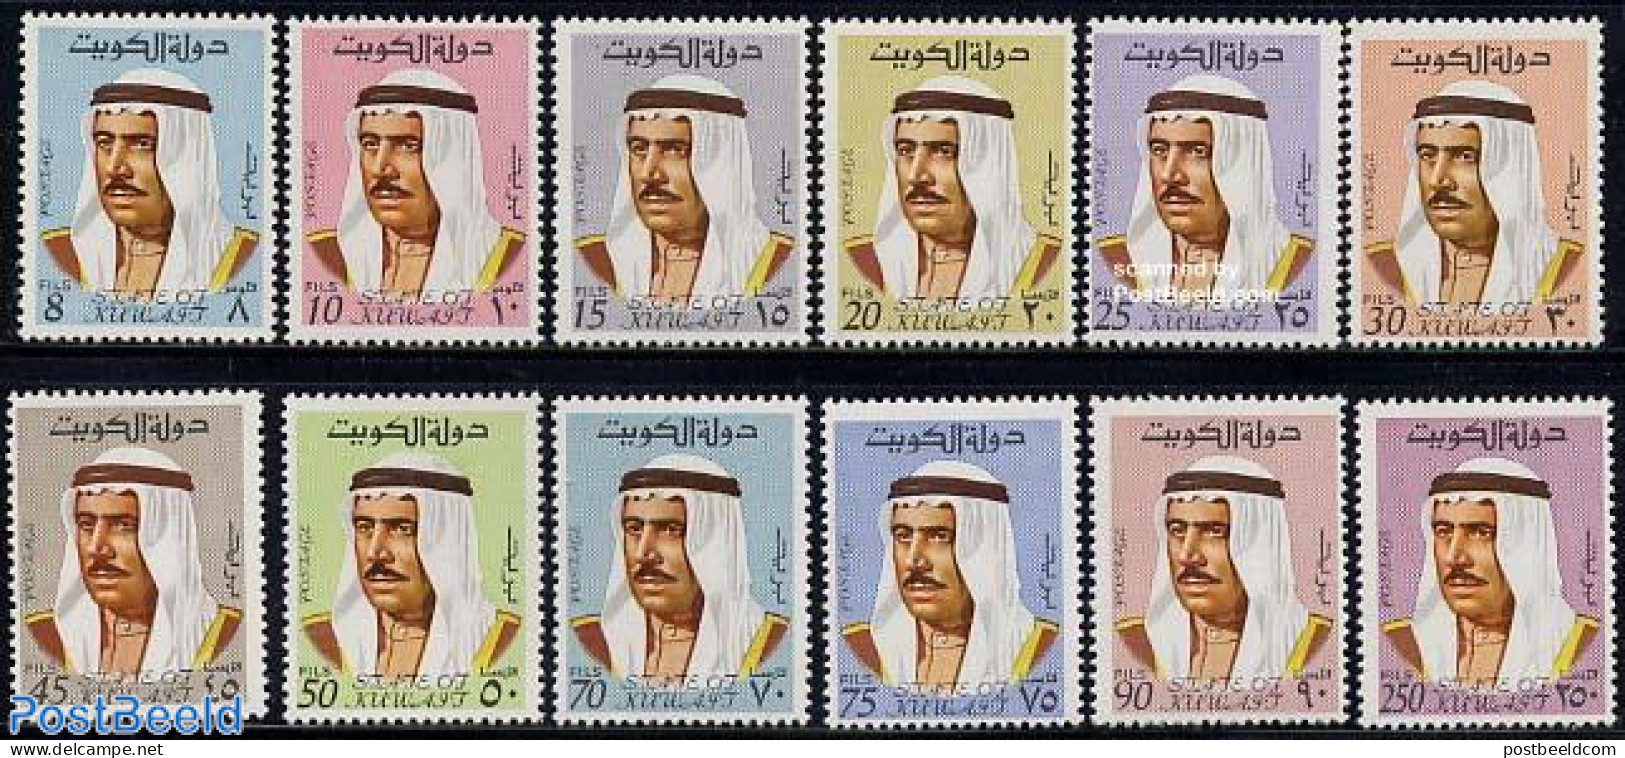 Kuwait 1969 Definitives 12v, Mint NH - Kuwait